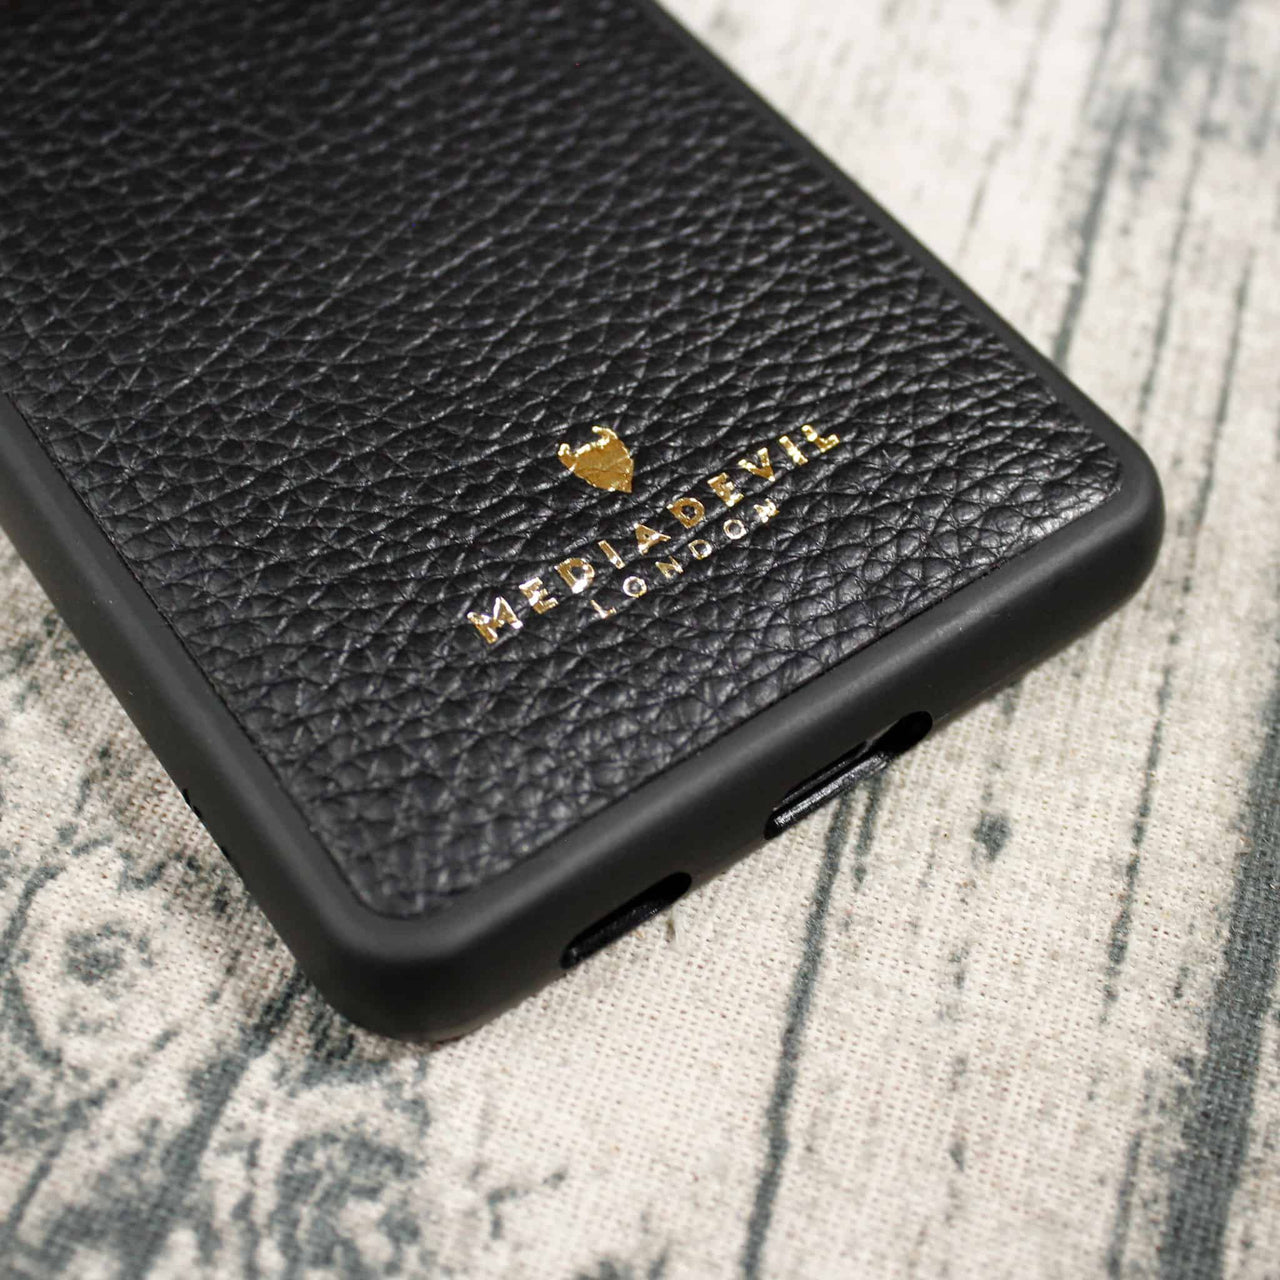 Samsung Galaxy S21 Plus Leather Bumper Case | Artisancase